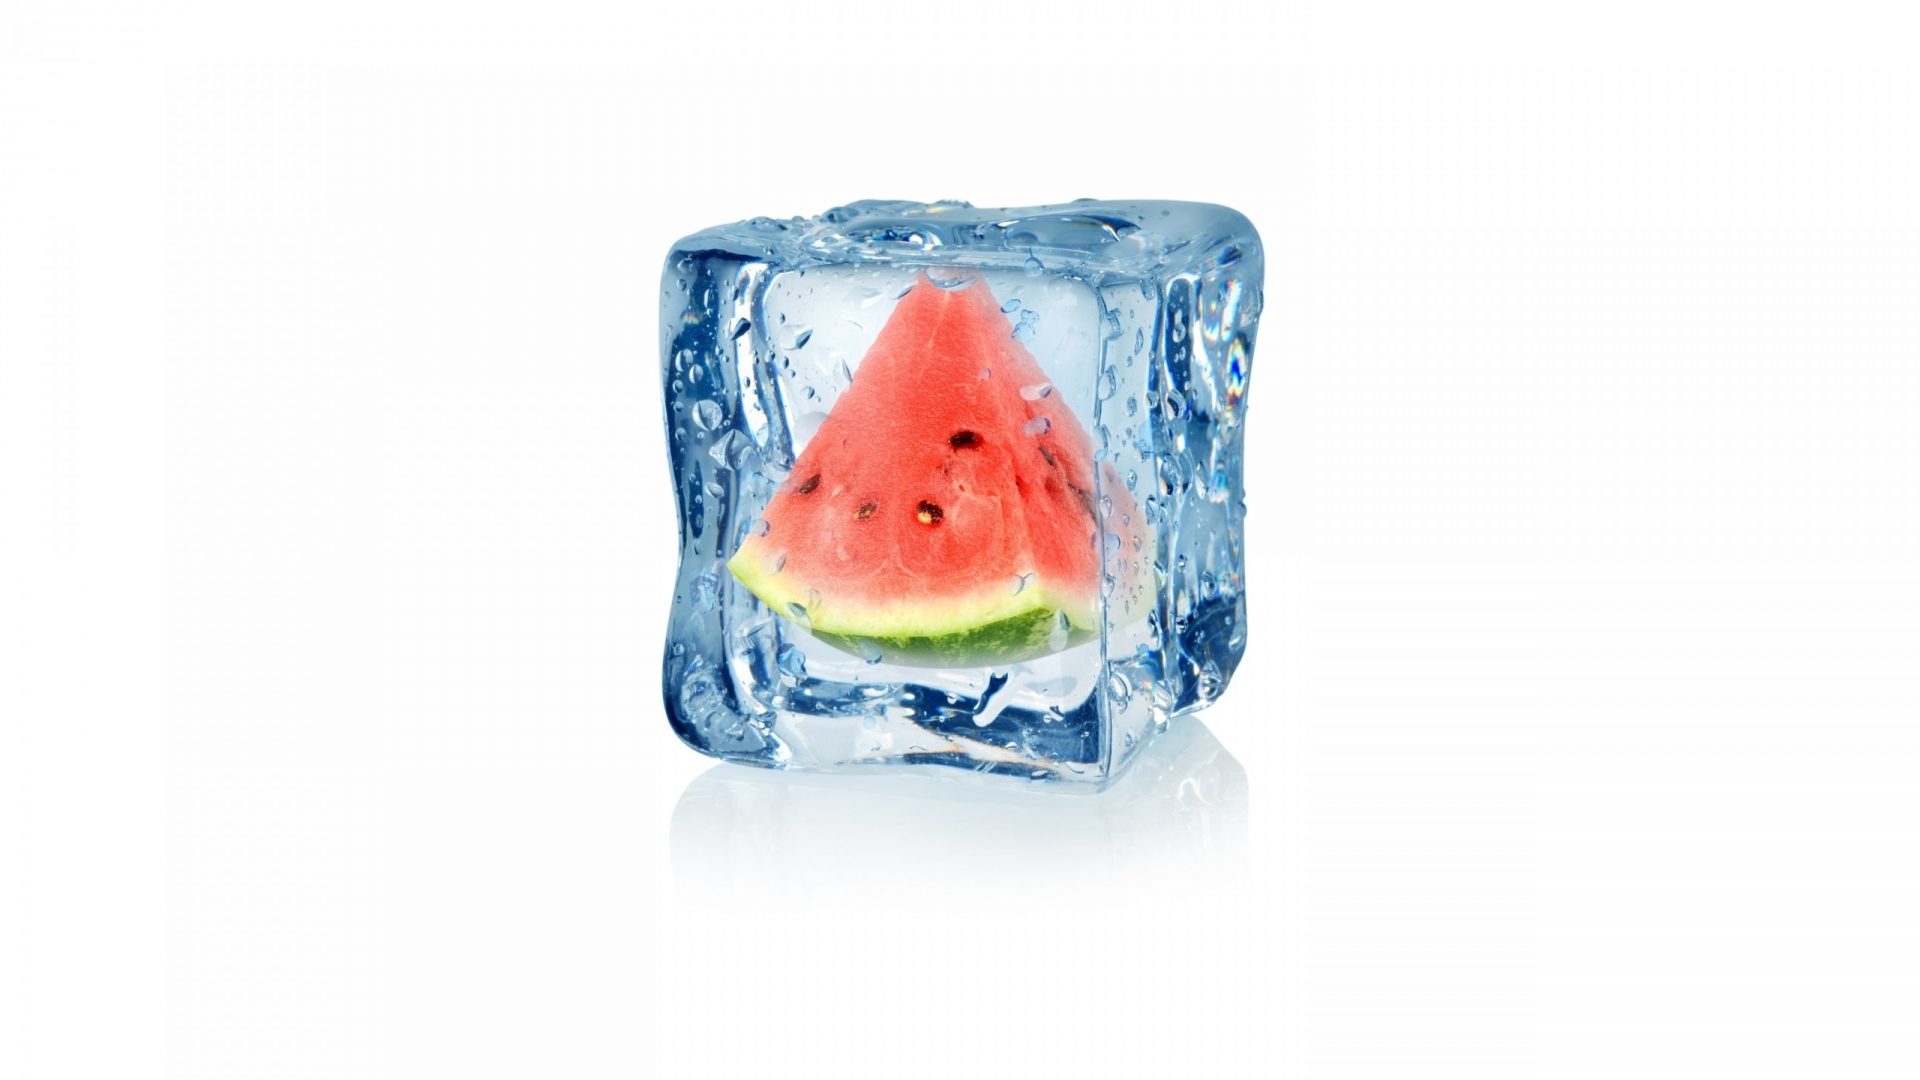 Frozen Watermelon  for 1920 x 1080 HDTV 1080p resolution